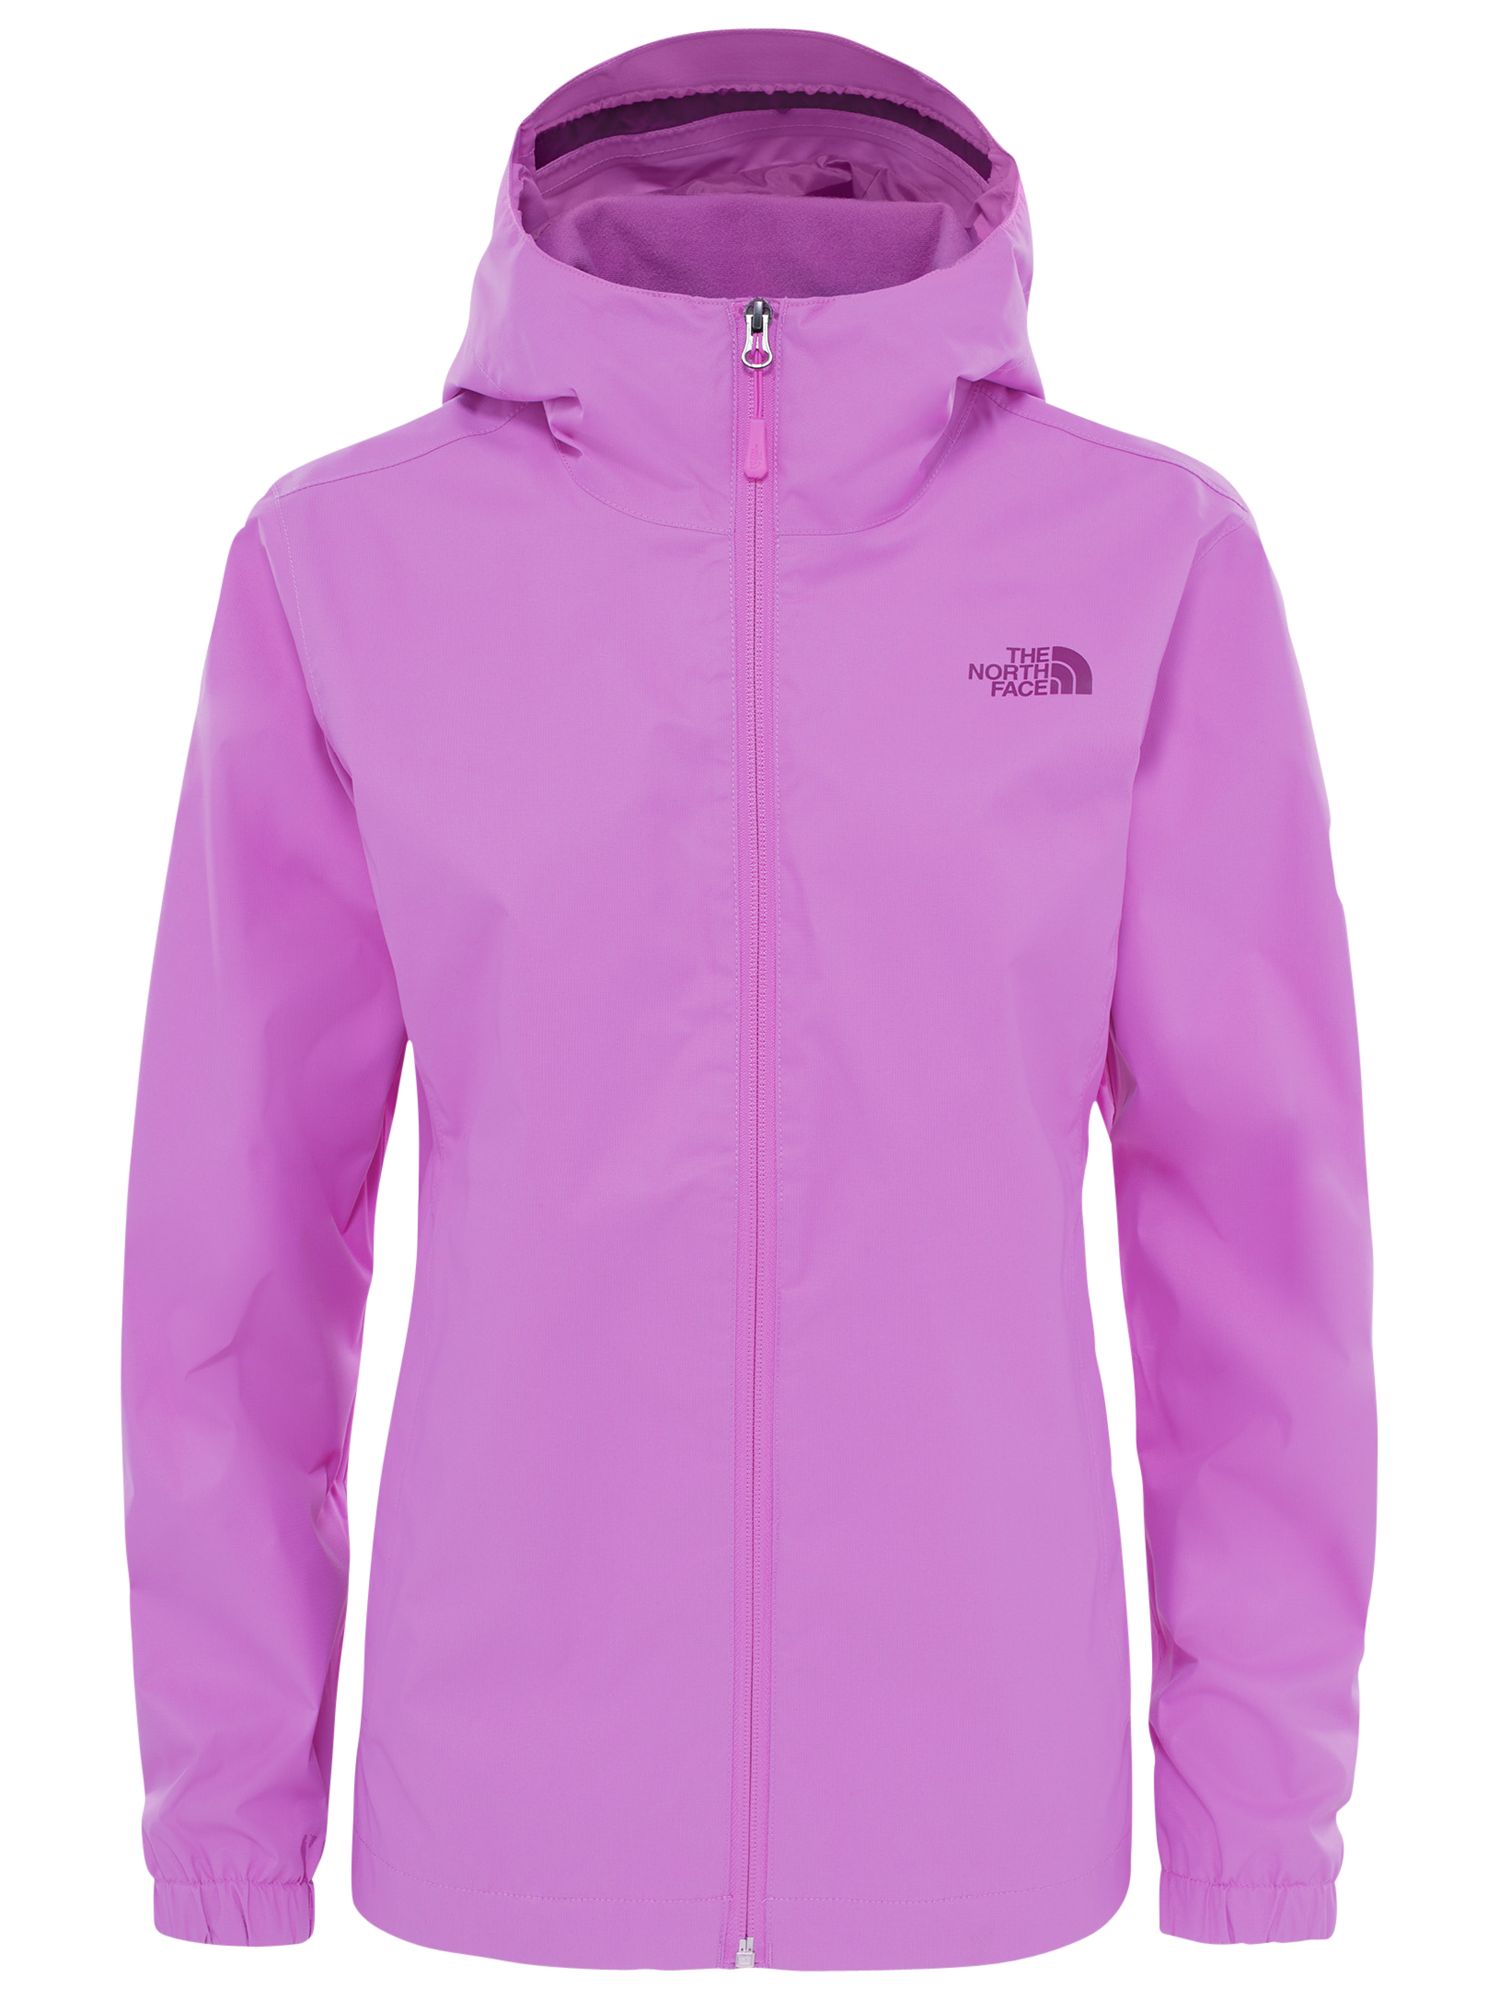 The North Face Quest Waterproof Women's Jacket, Purple, L